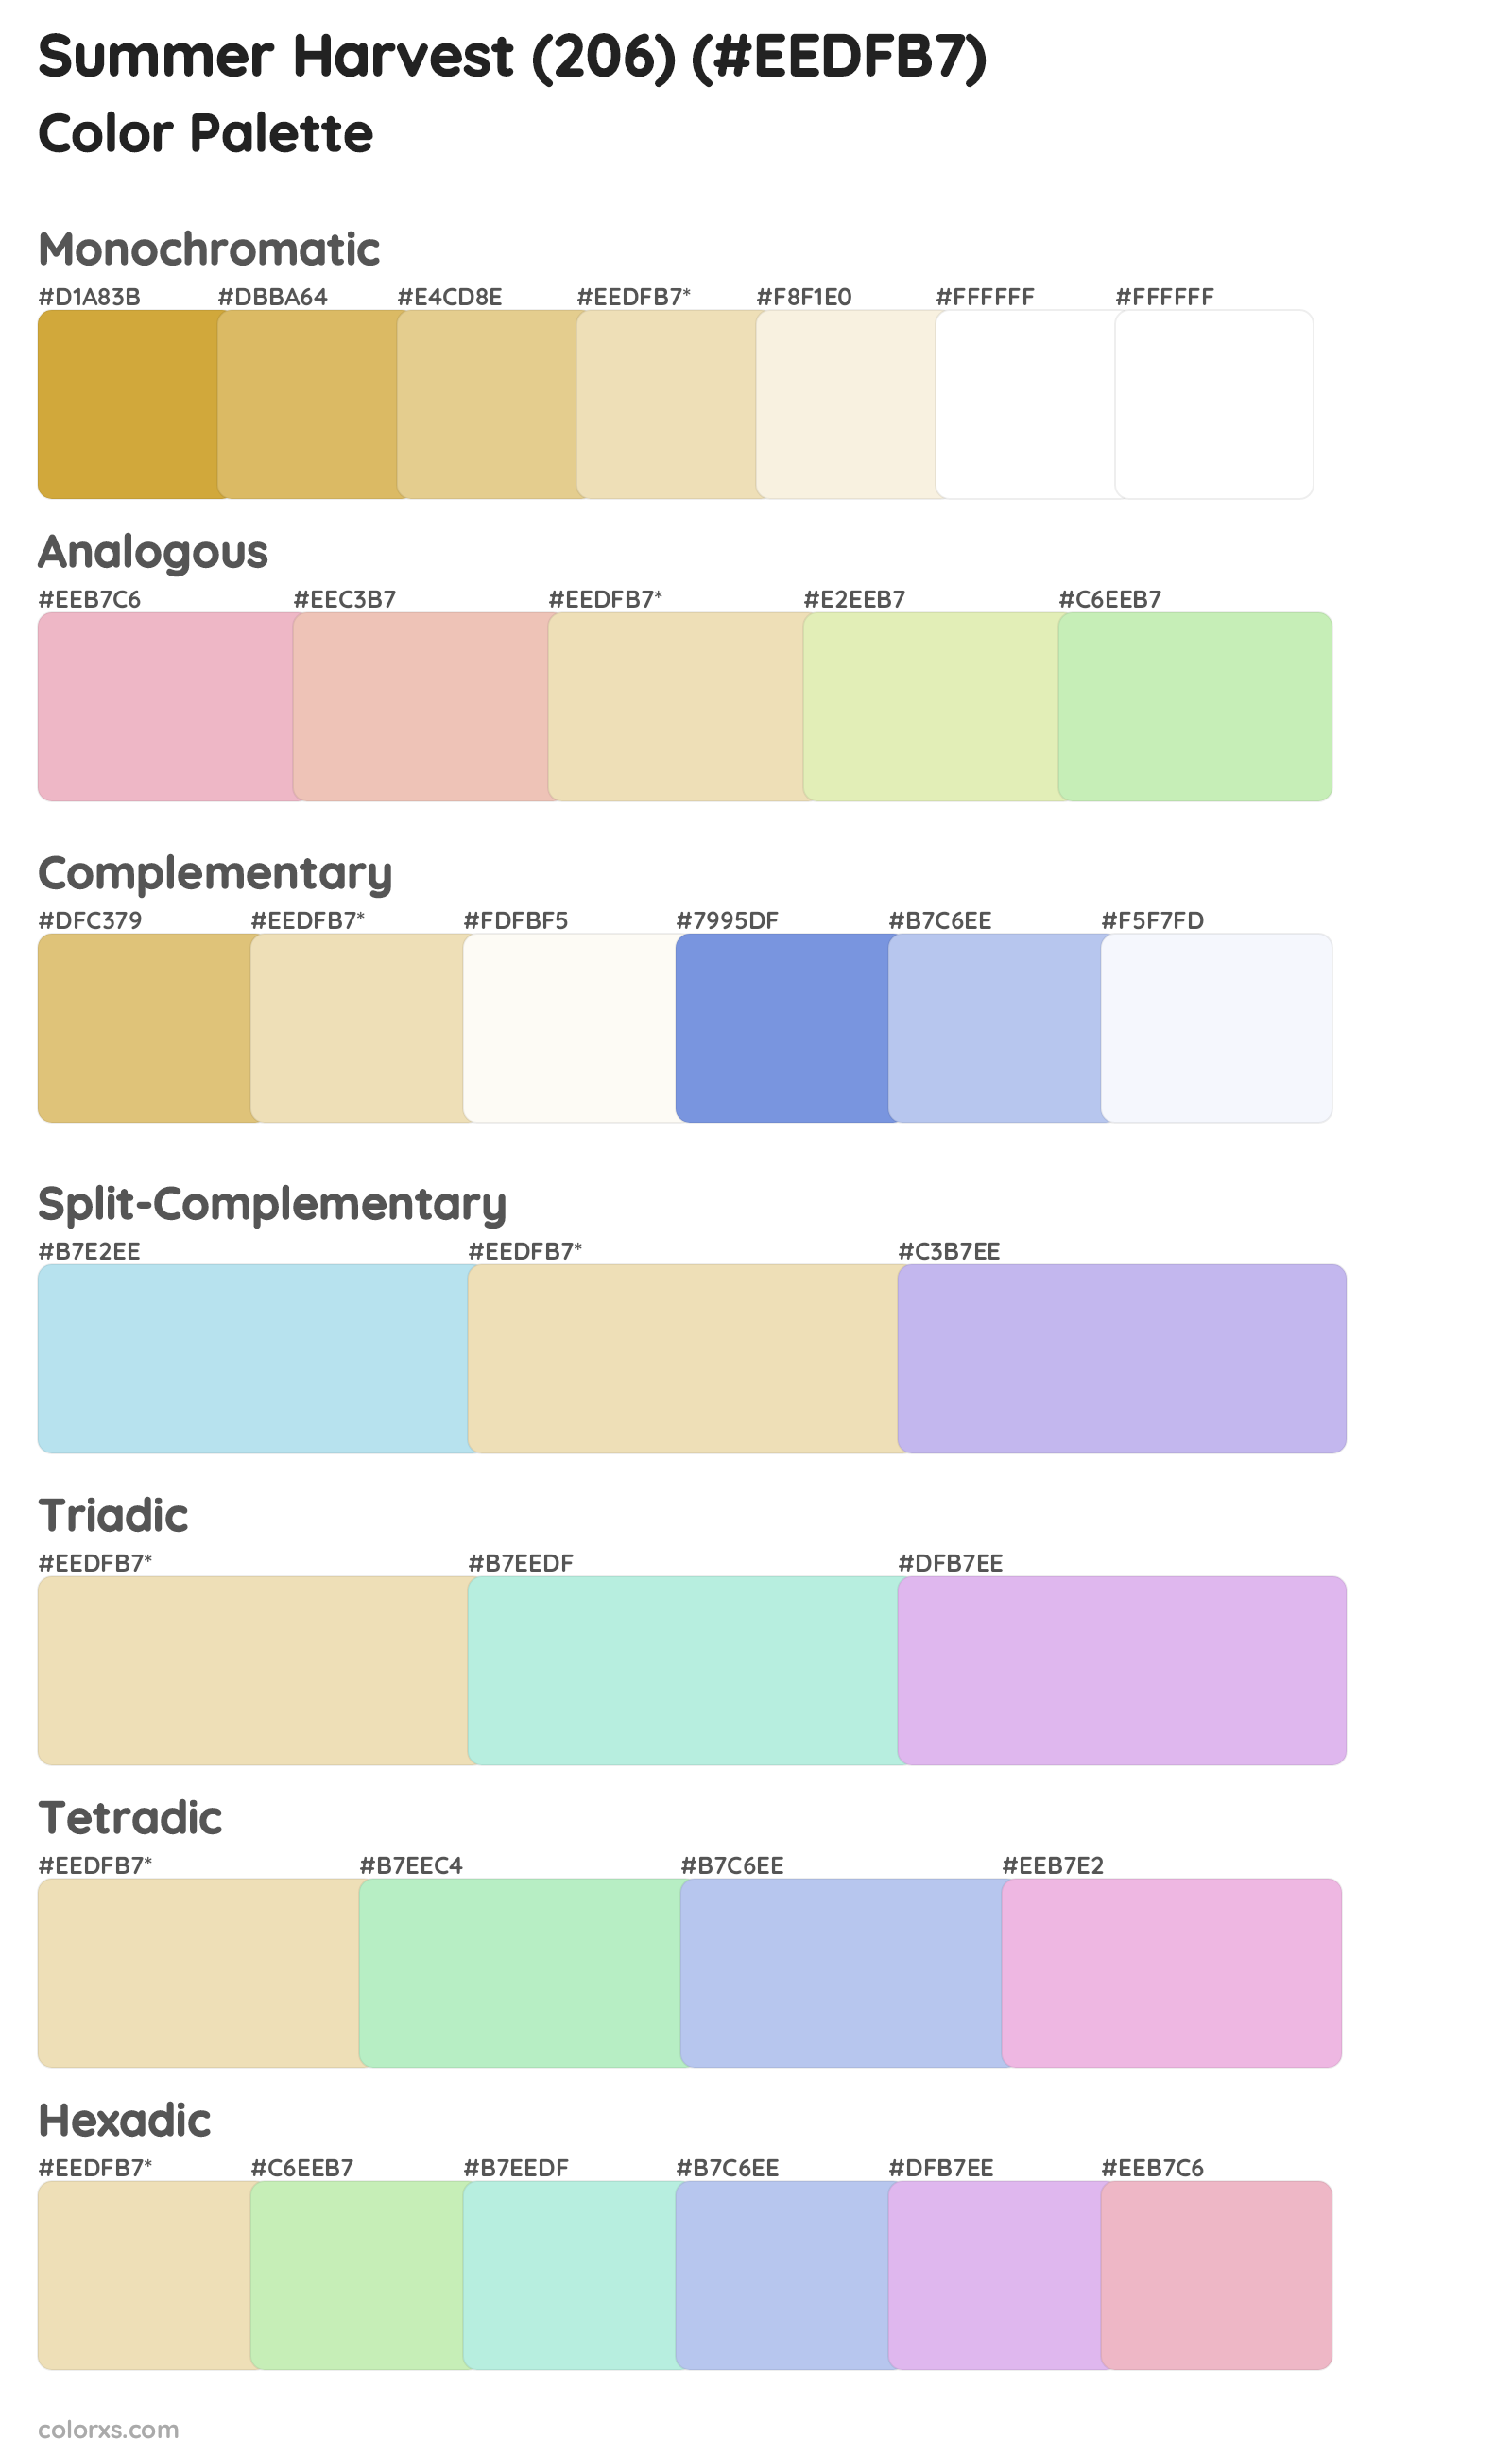 Summer Harvest (206) Color Scheme Palettes